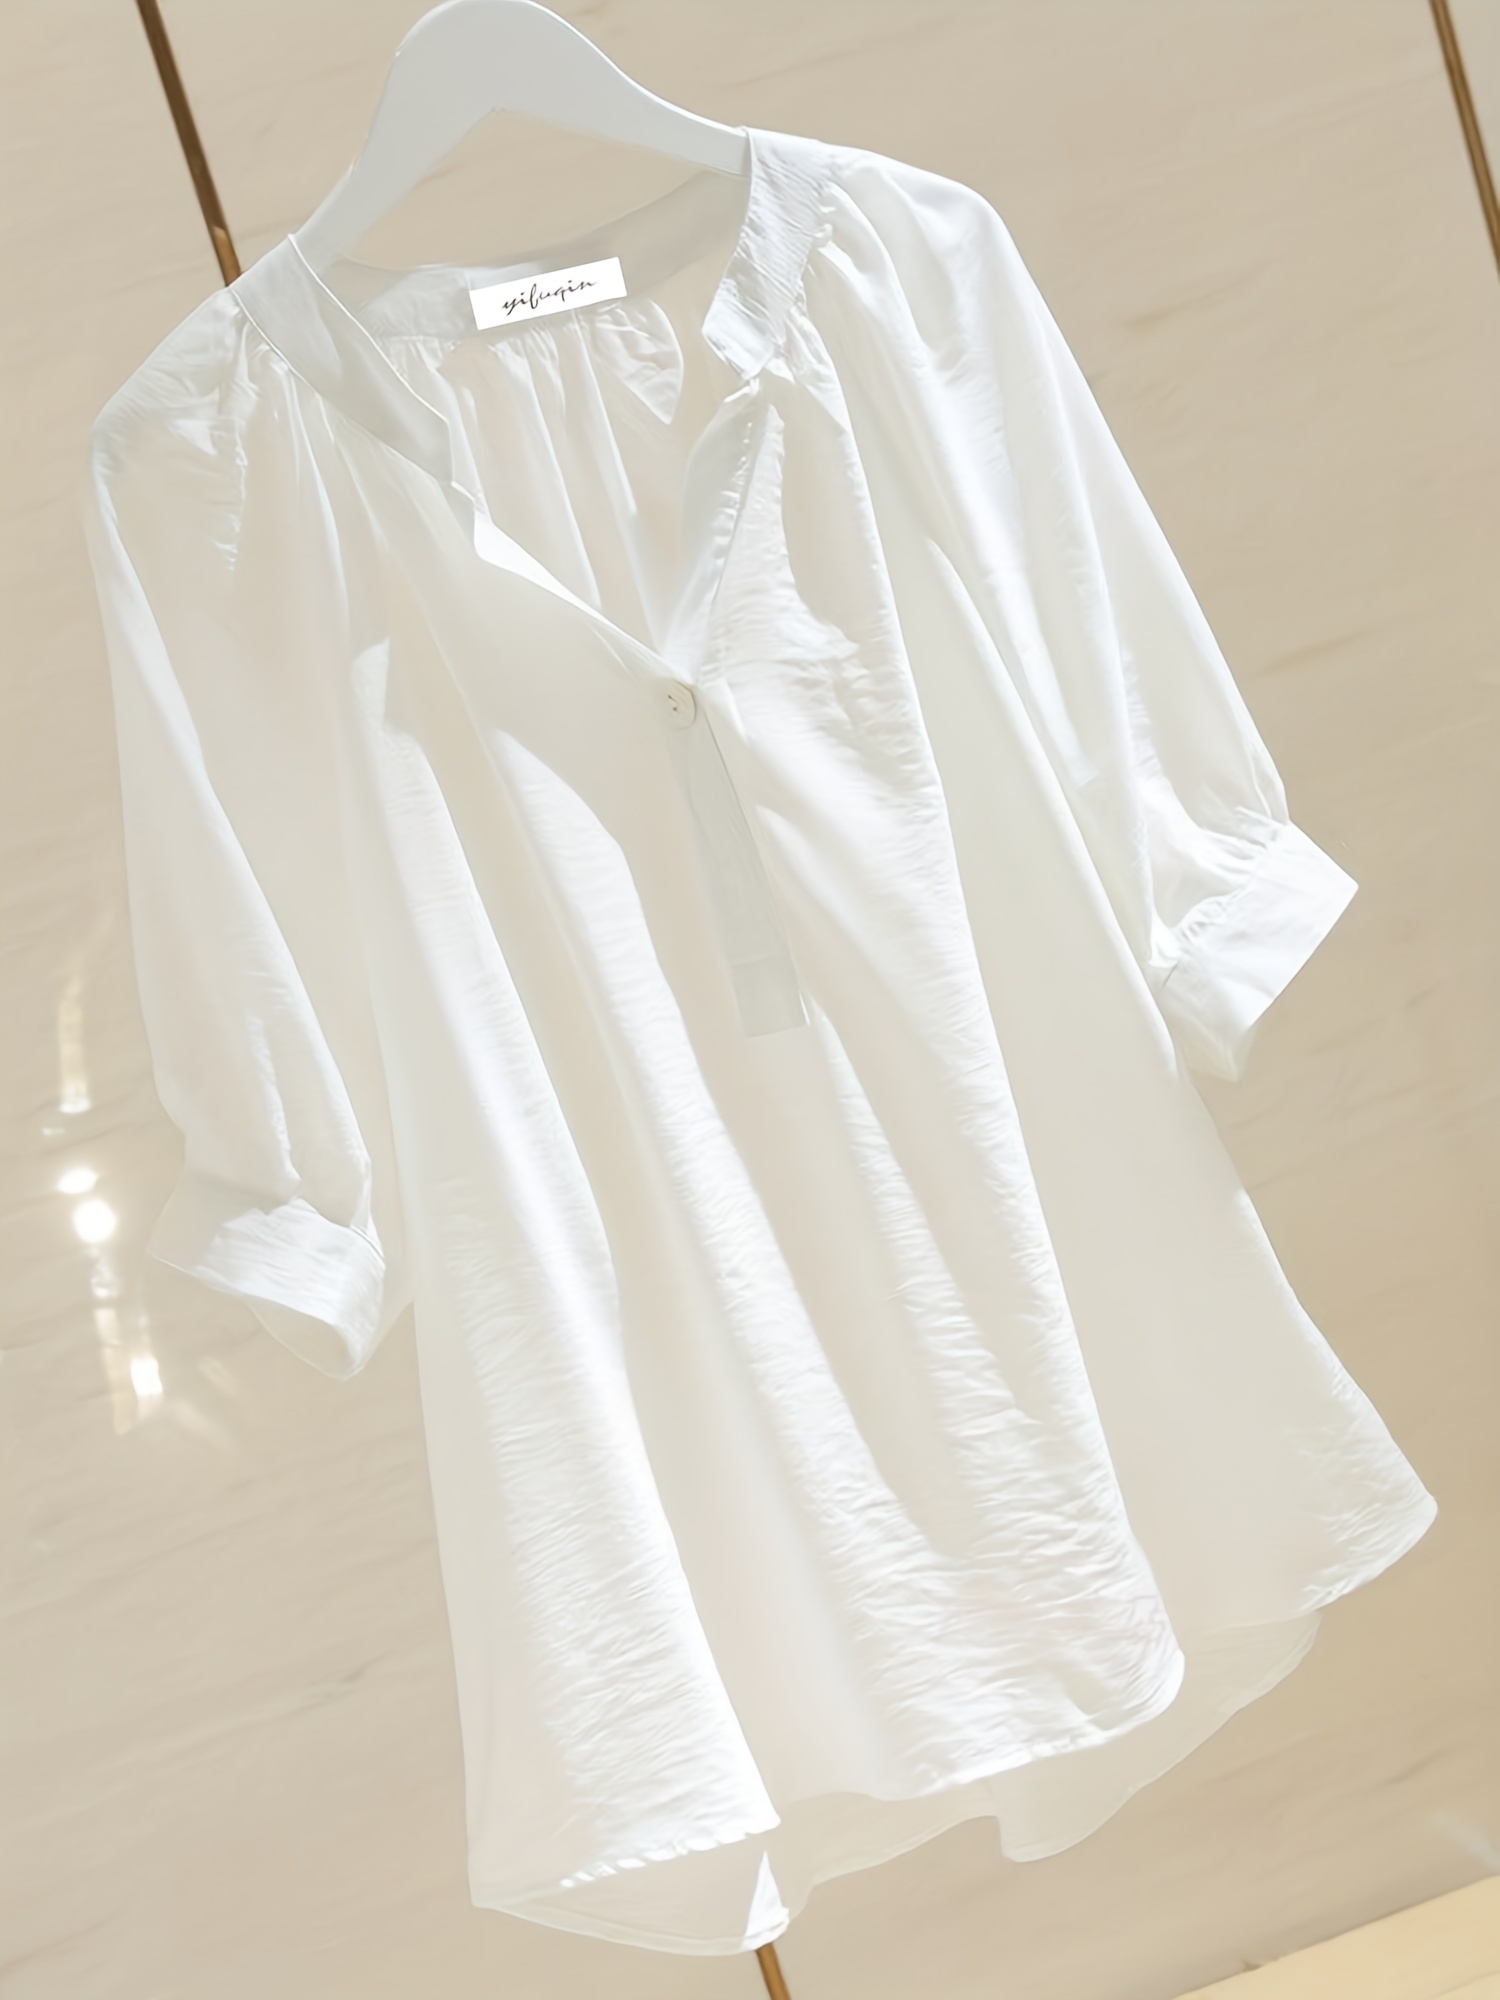 Blusa blanca  Ladies tops blouses, Fashion outfits, Fashion tops